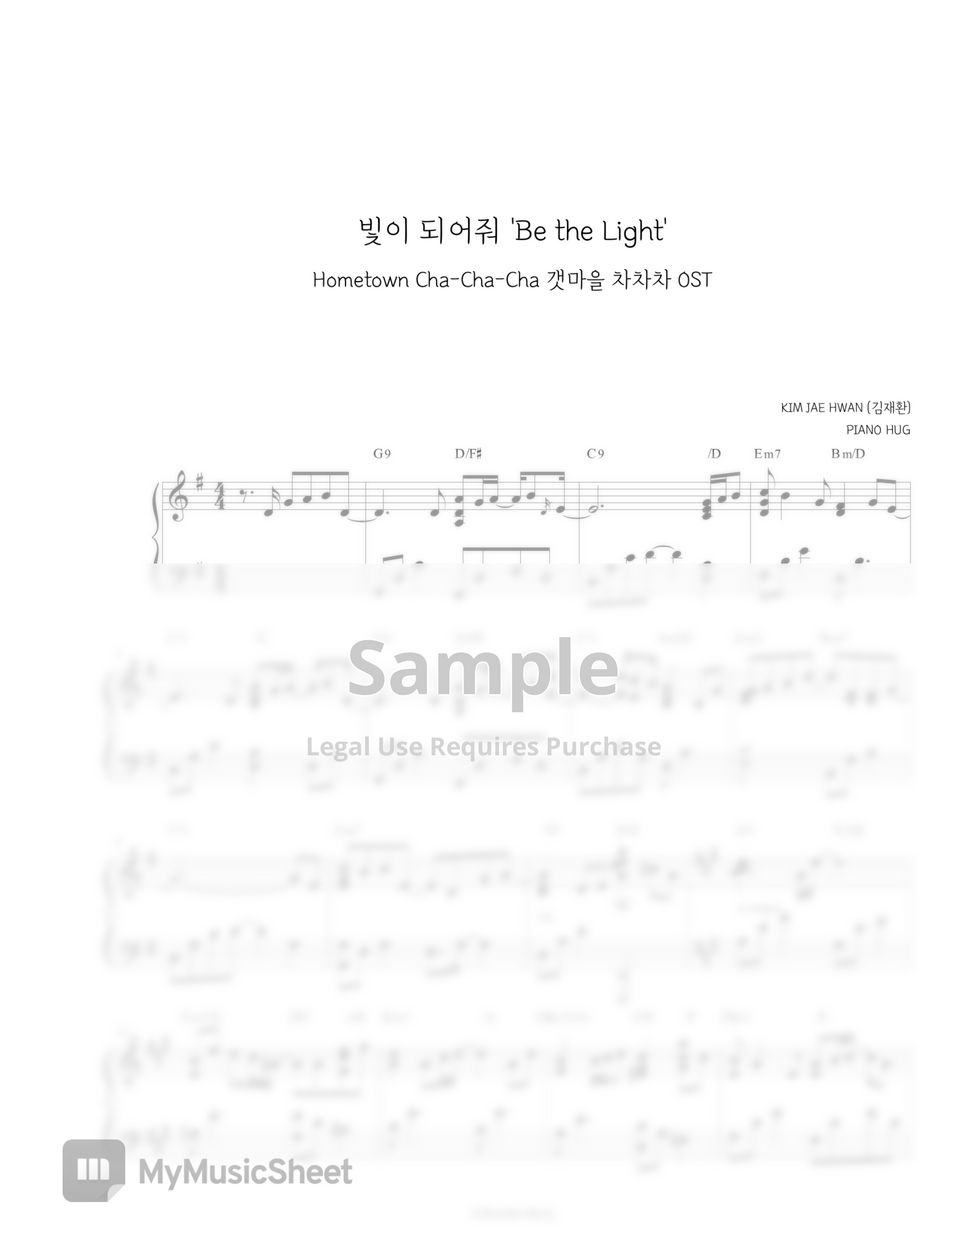 Kim Jae Hwan (김재환) - Be the Light '빛이 되어줘' (Hometown Cha Cha Cha OST) by Piano Hug